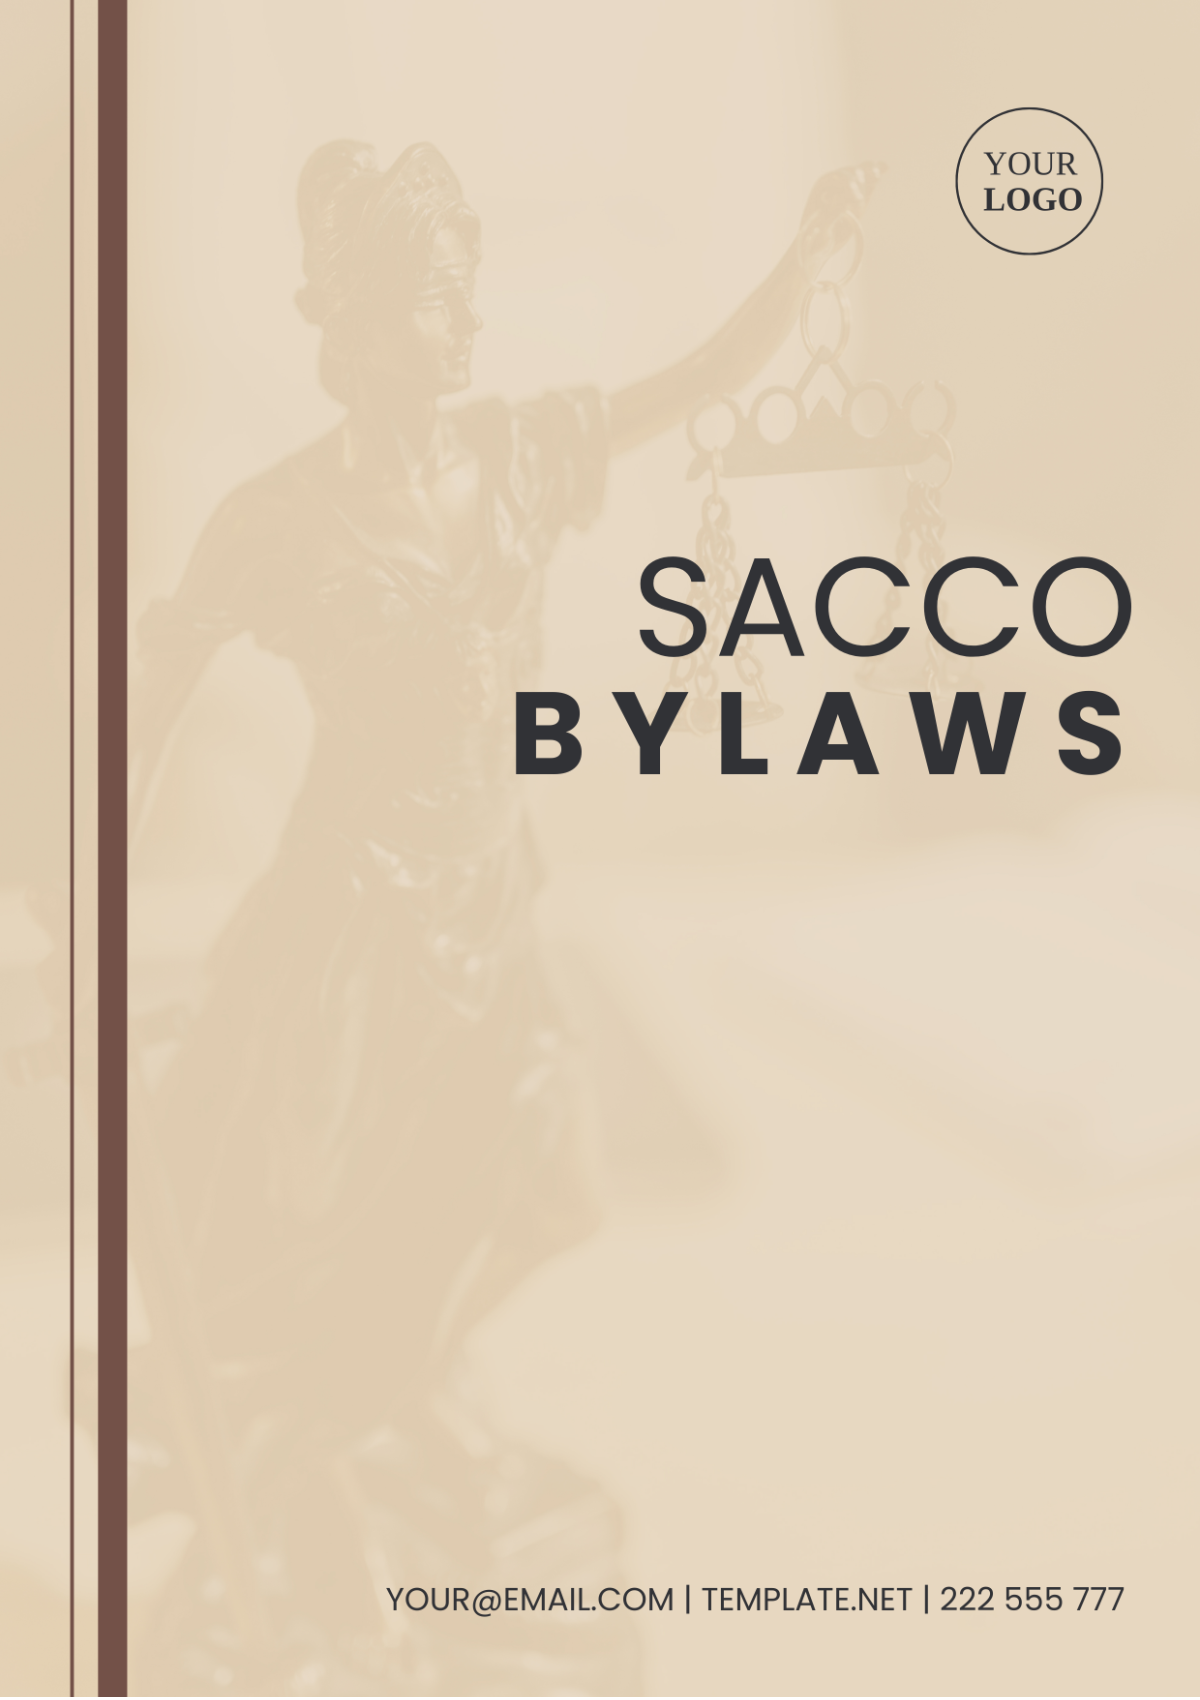 Sacco Bylaws Template